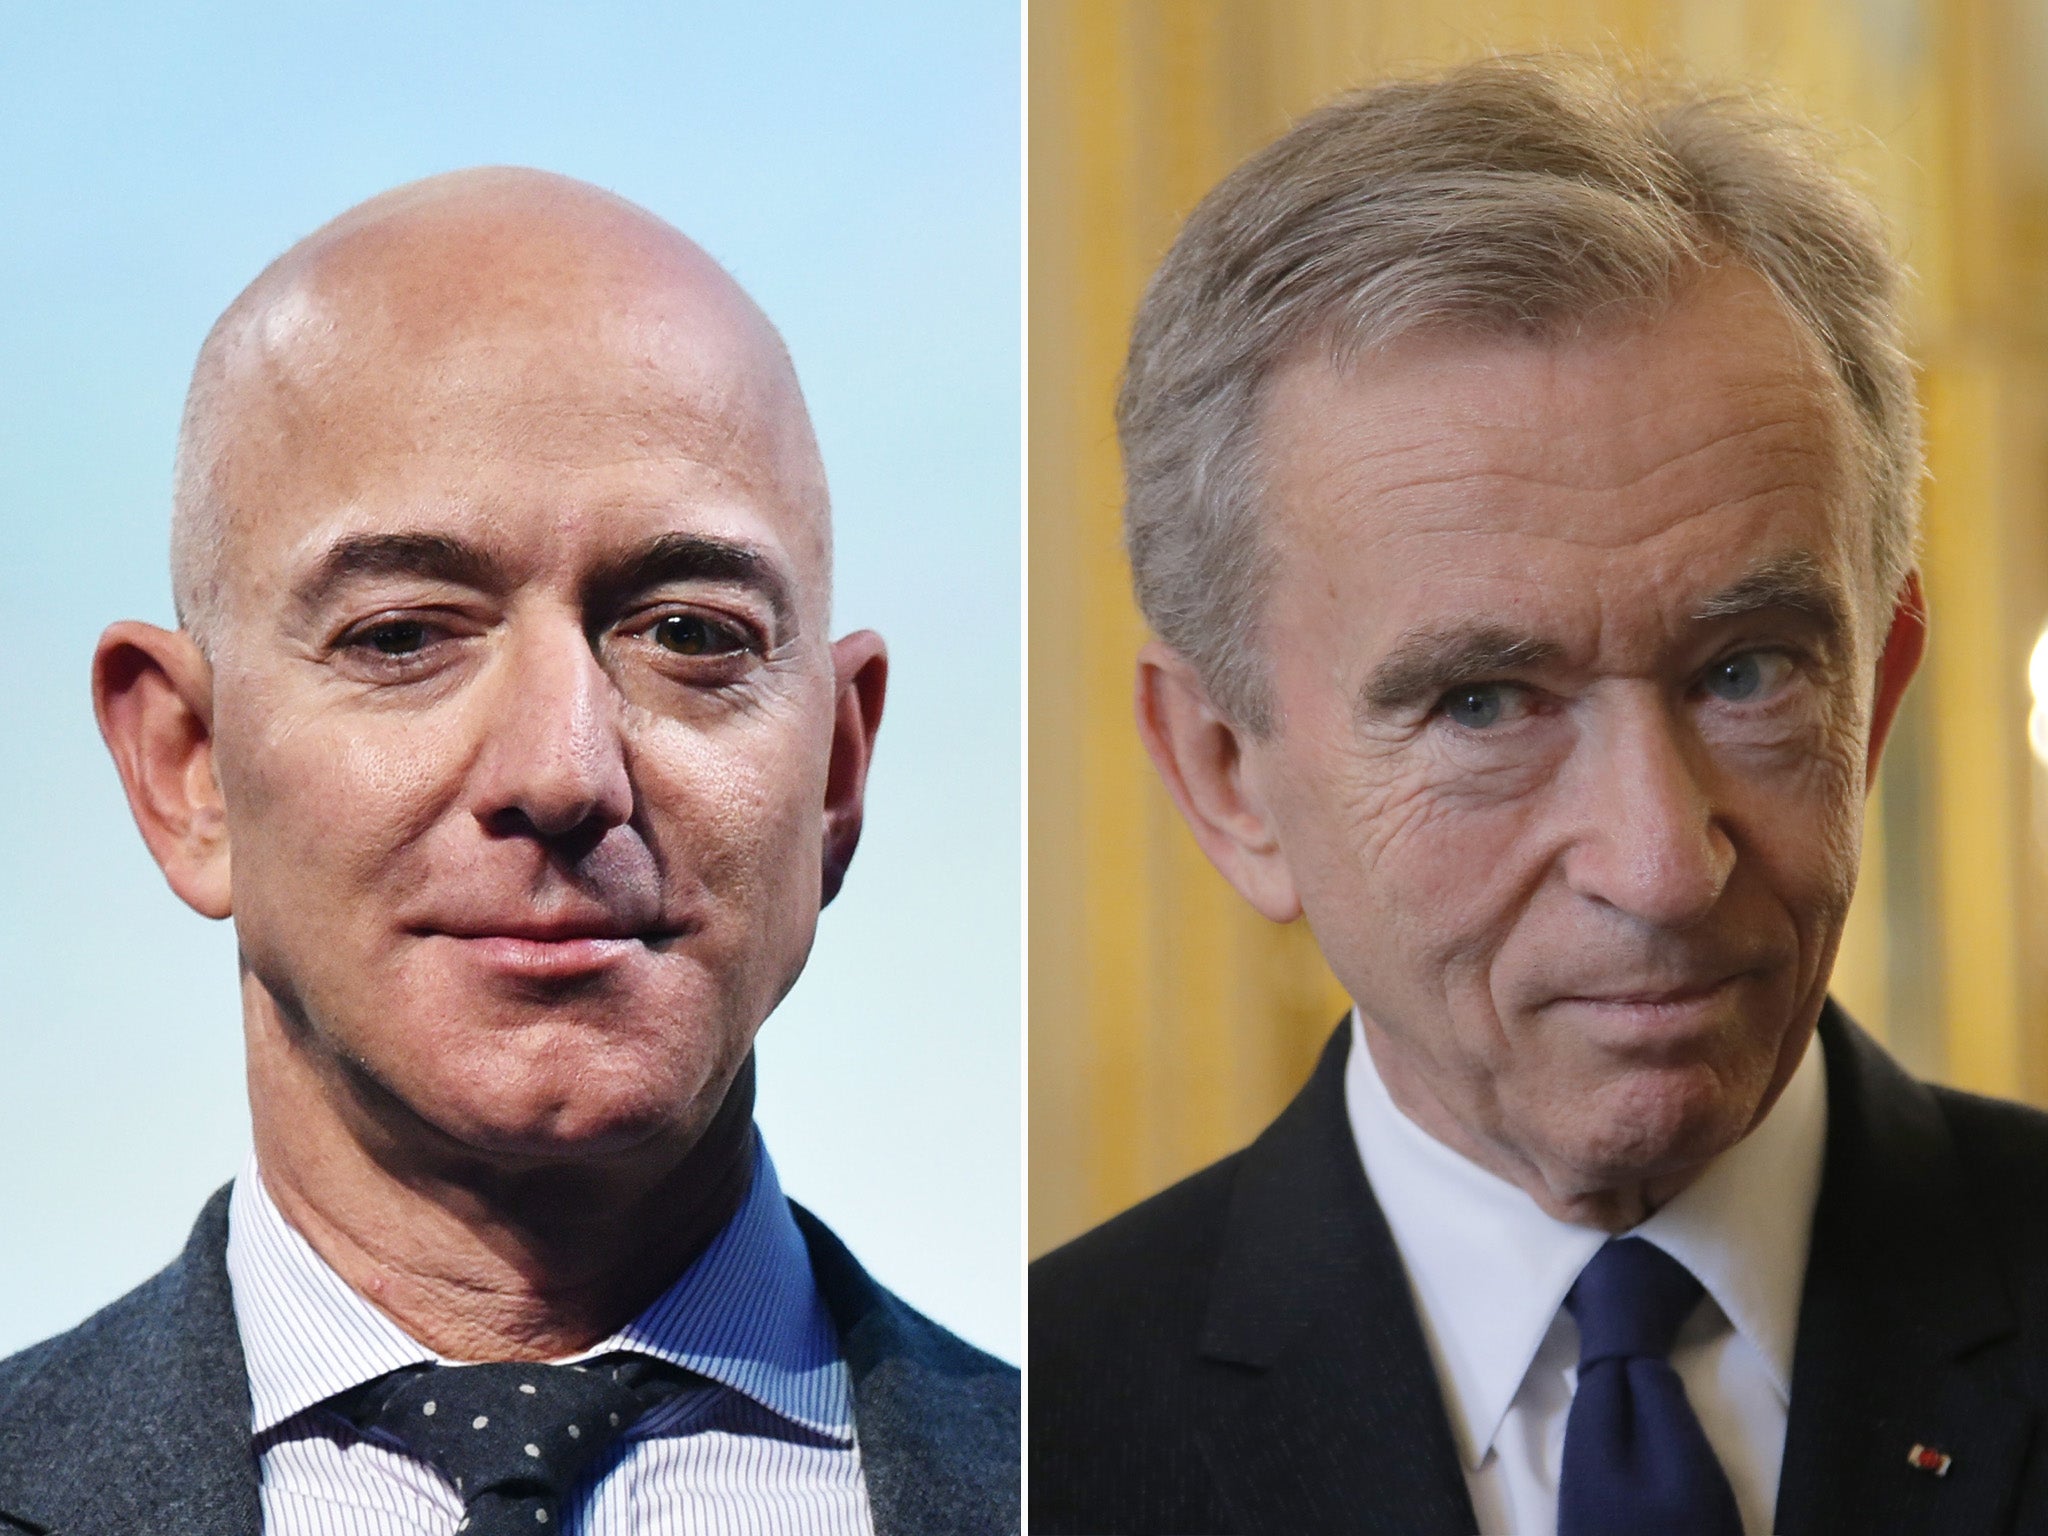 Jeff Bezos represents US tech and Bernard Arnault is a symbol of luxury